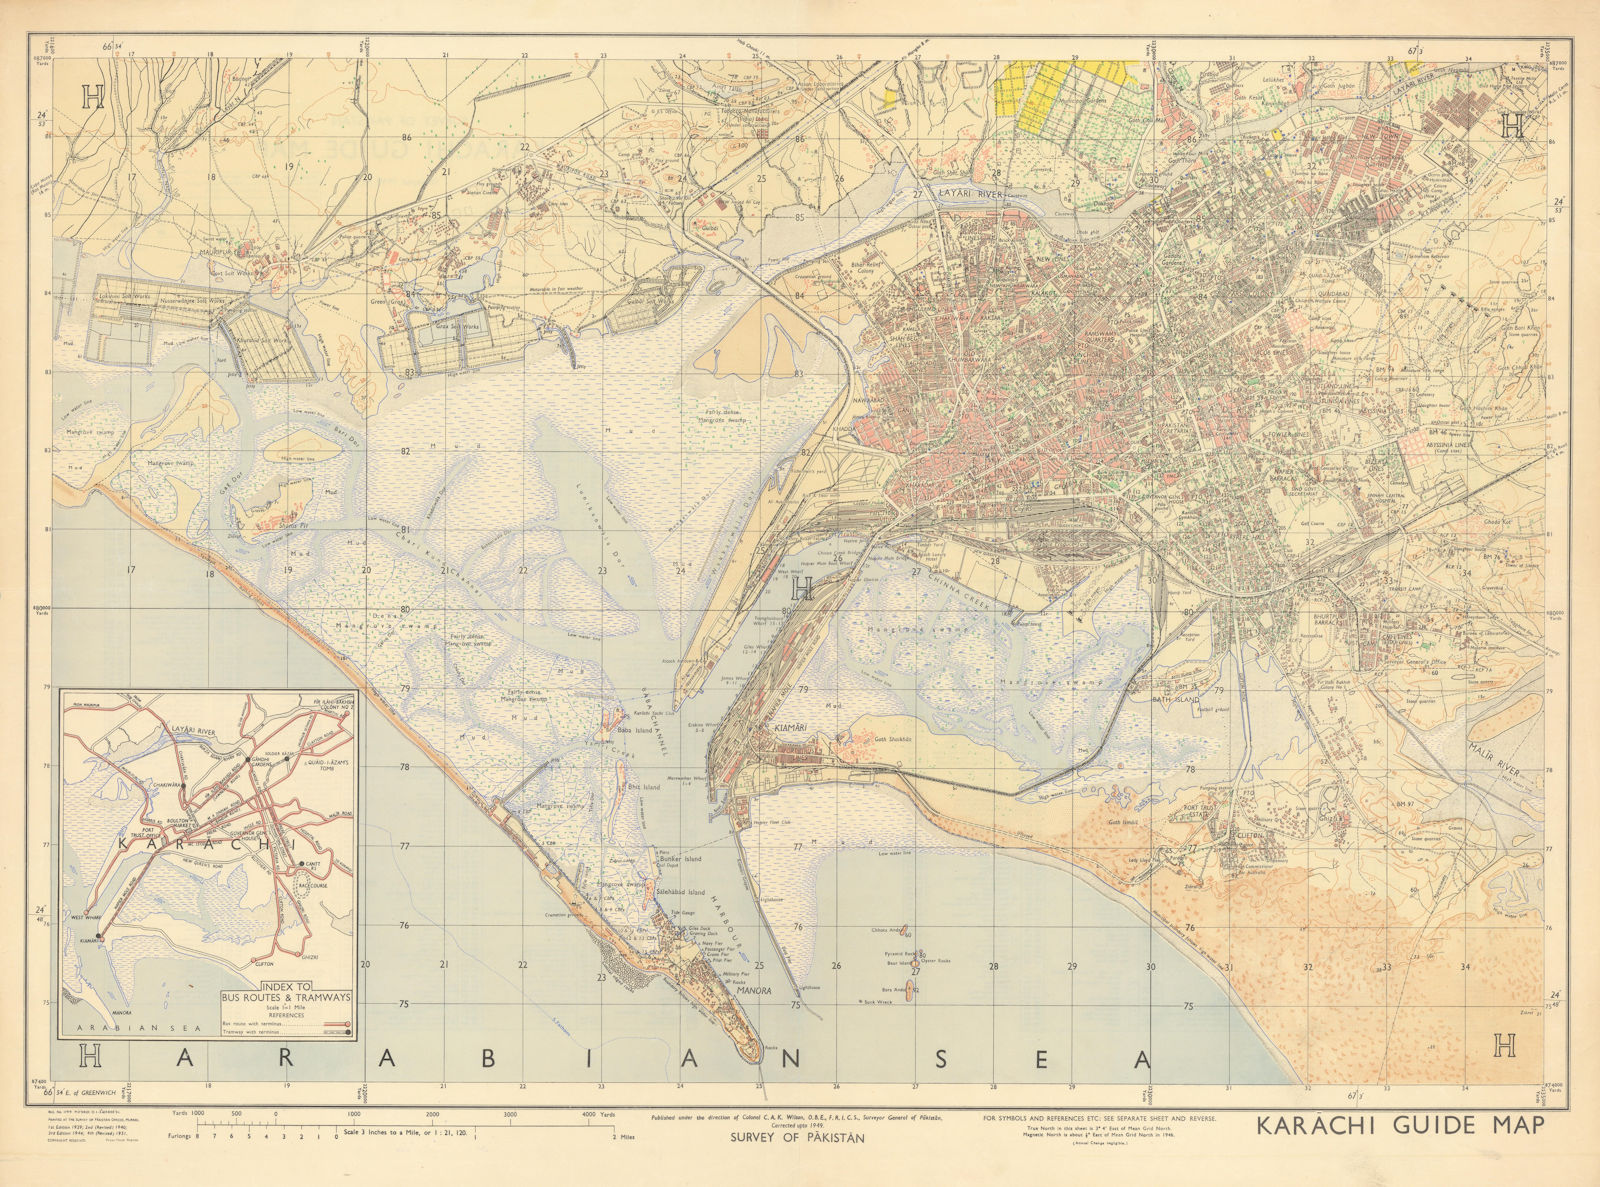 Karachi Town city plan. Survey of Pakistan 1951 old vintage map chart